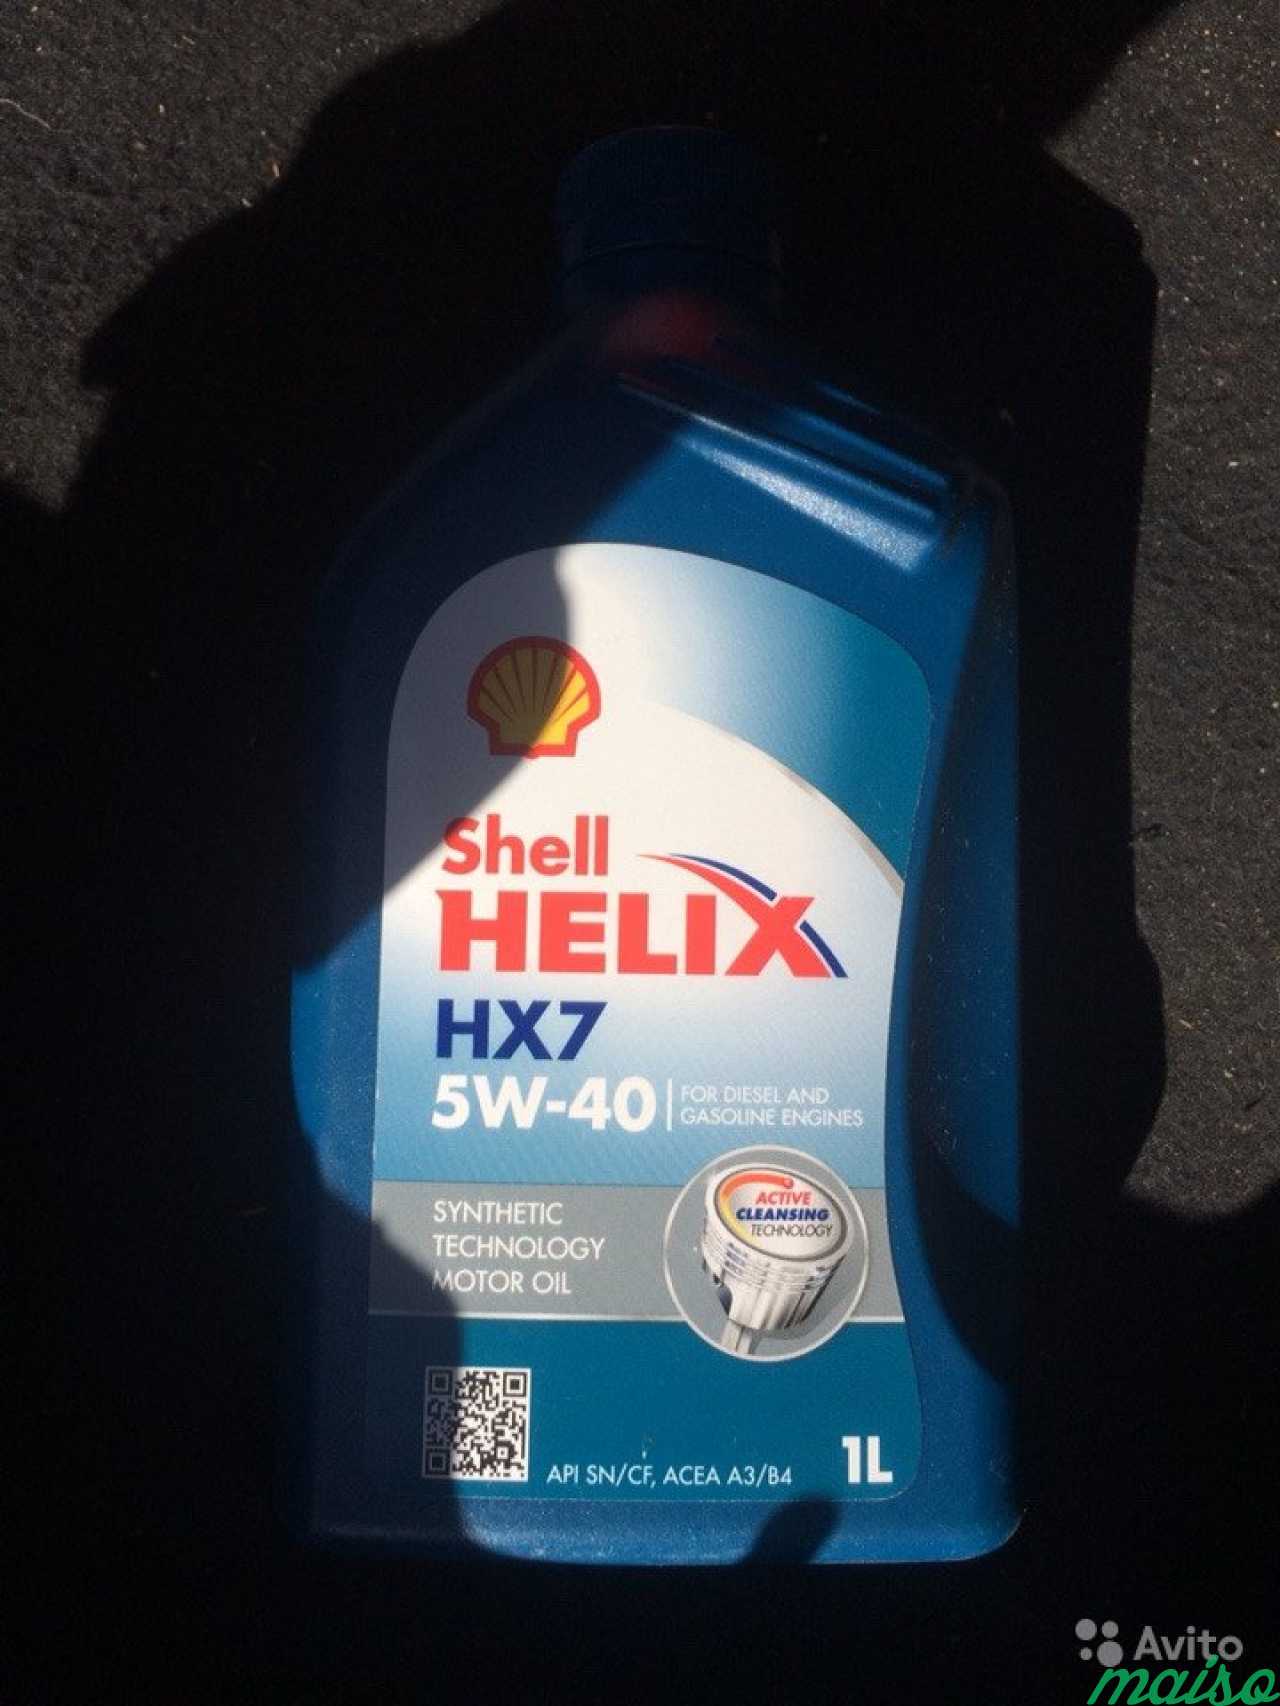 Литр масла shell. Shell Helix hx7 5w-40. Shell Helix 1литр. Shell maslo 1 litroviy. Шелл Хеликс литровые масла фото.